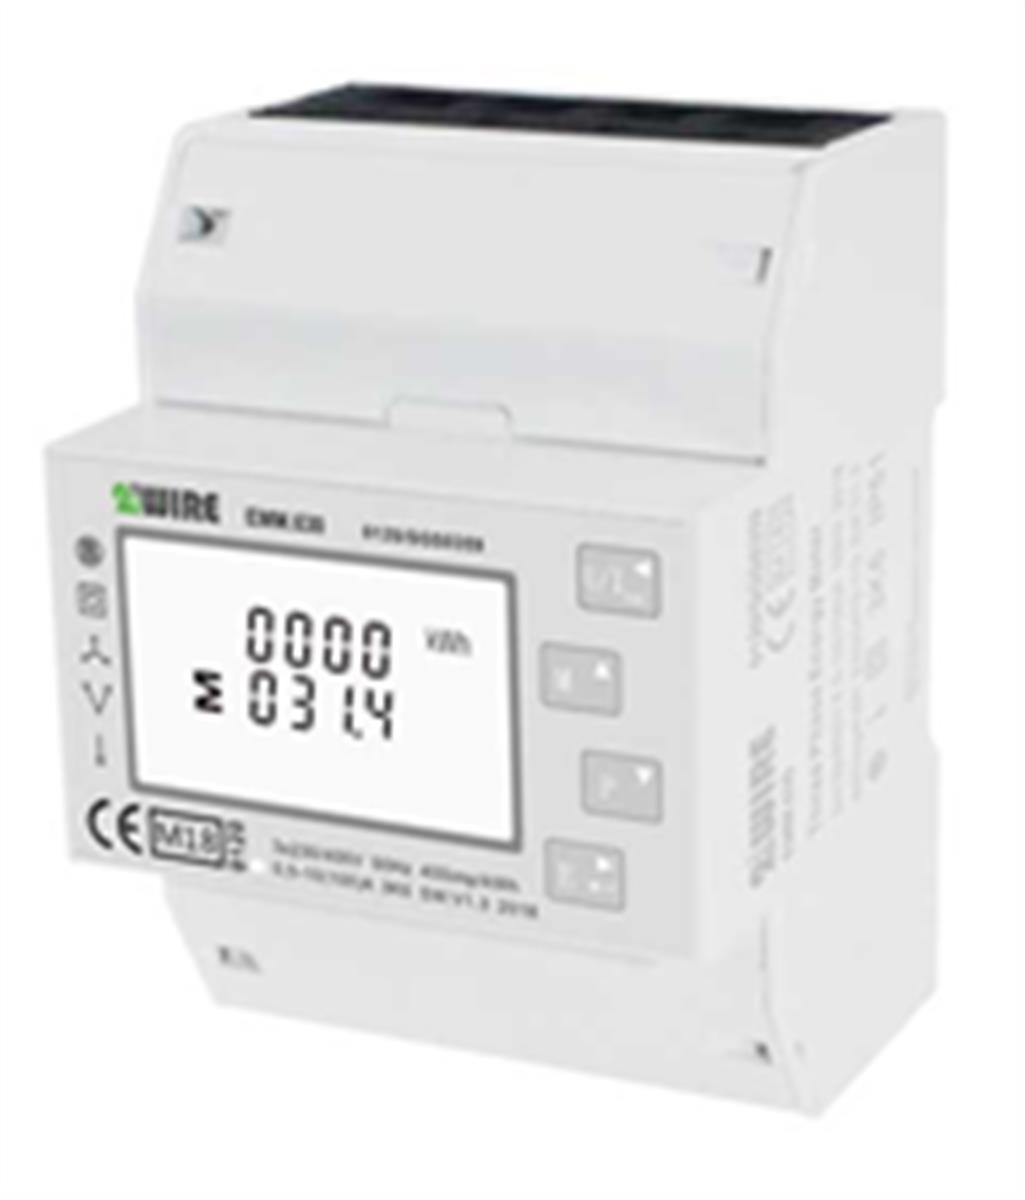 Bidirectionele energiemeter 3-fasig 100A (inline)